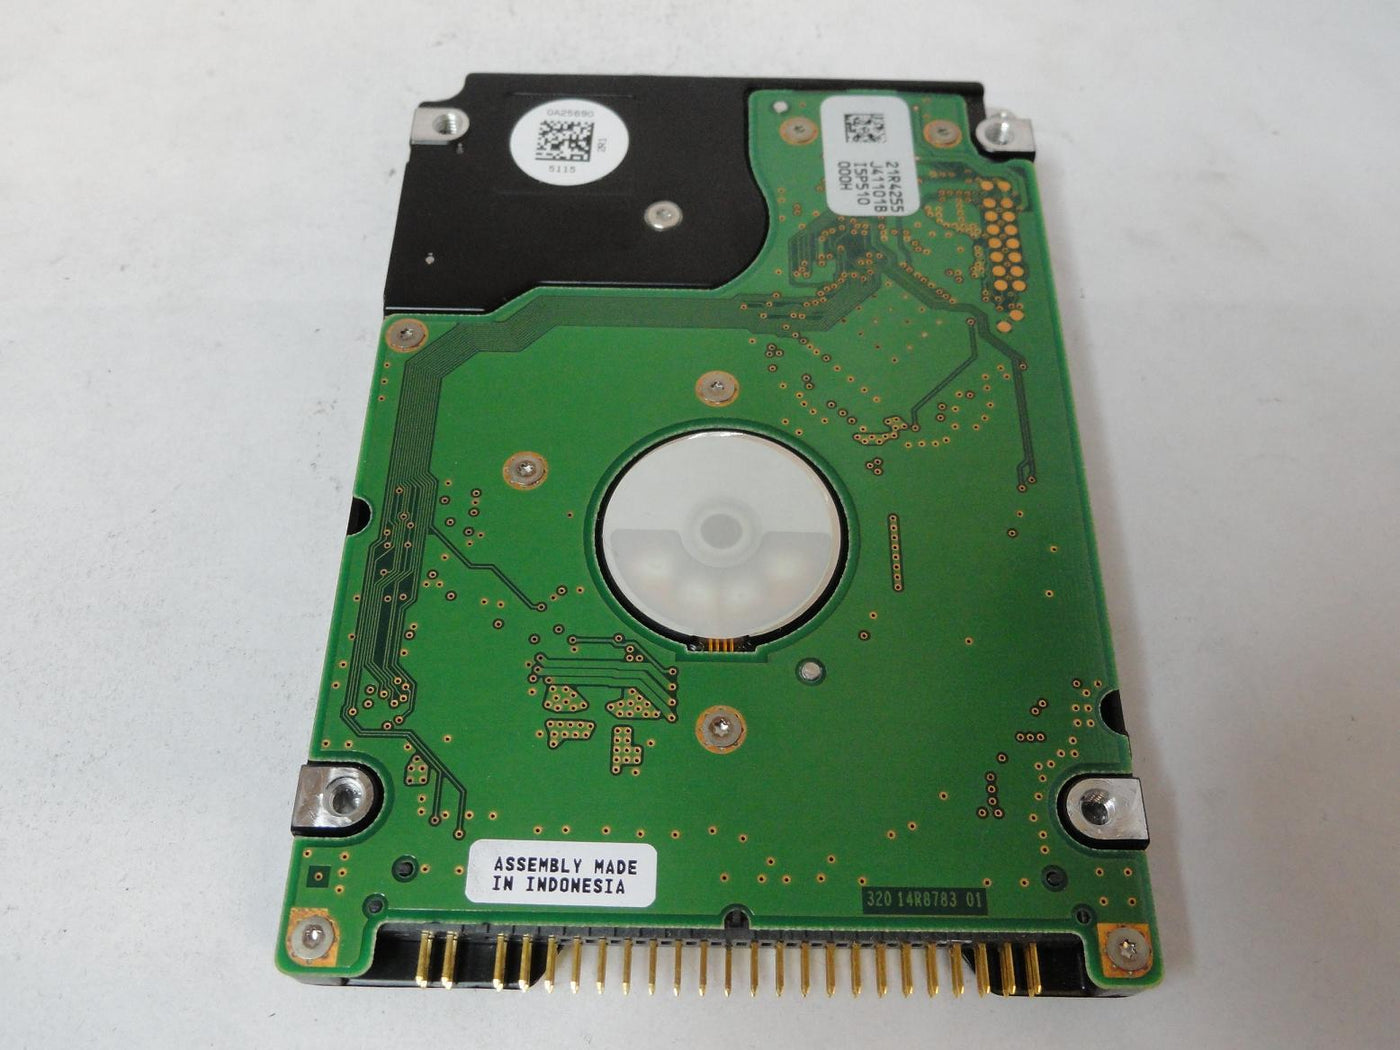 PR23958_0A26907_Hitachi IBM 30GB IDE 4200rpm 2.5in HDD - Image3